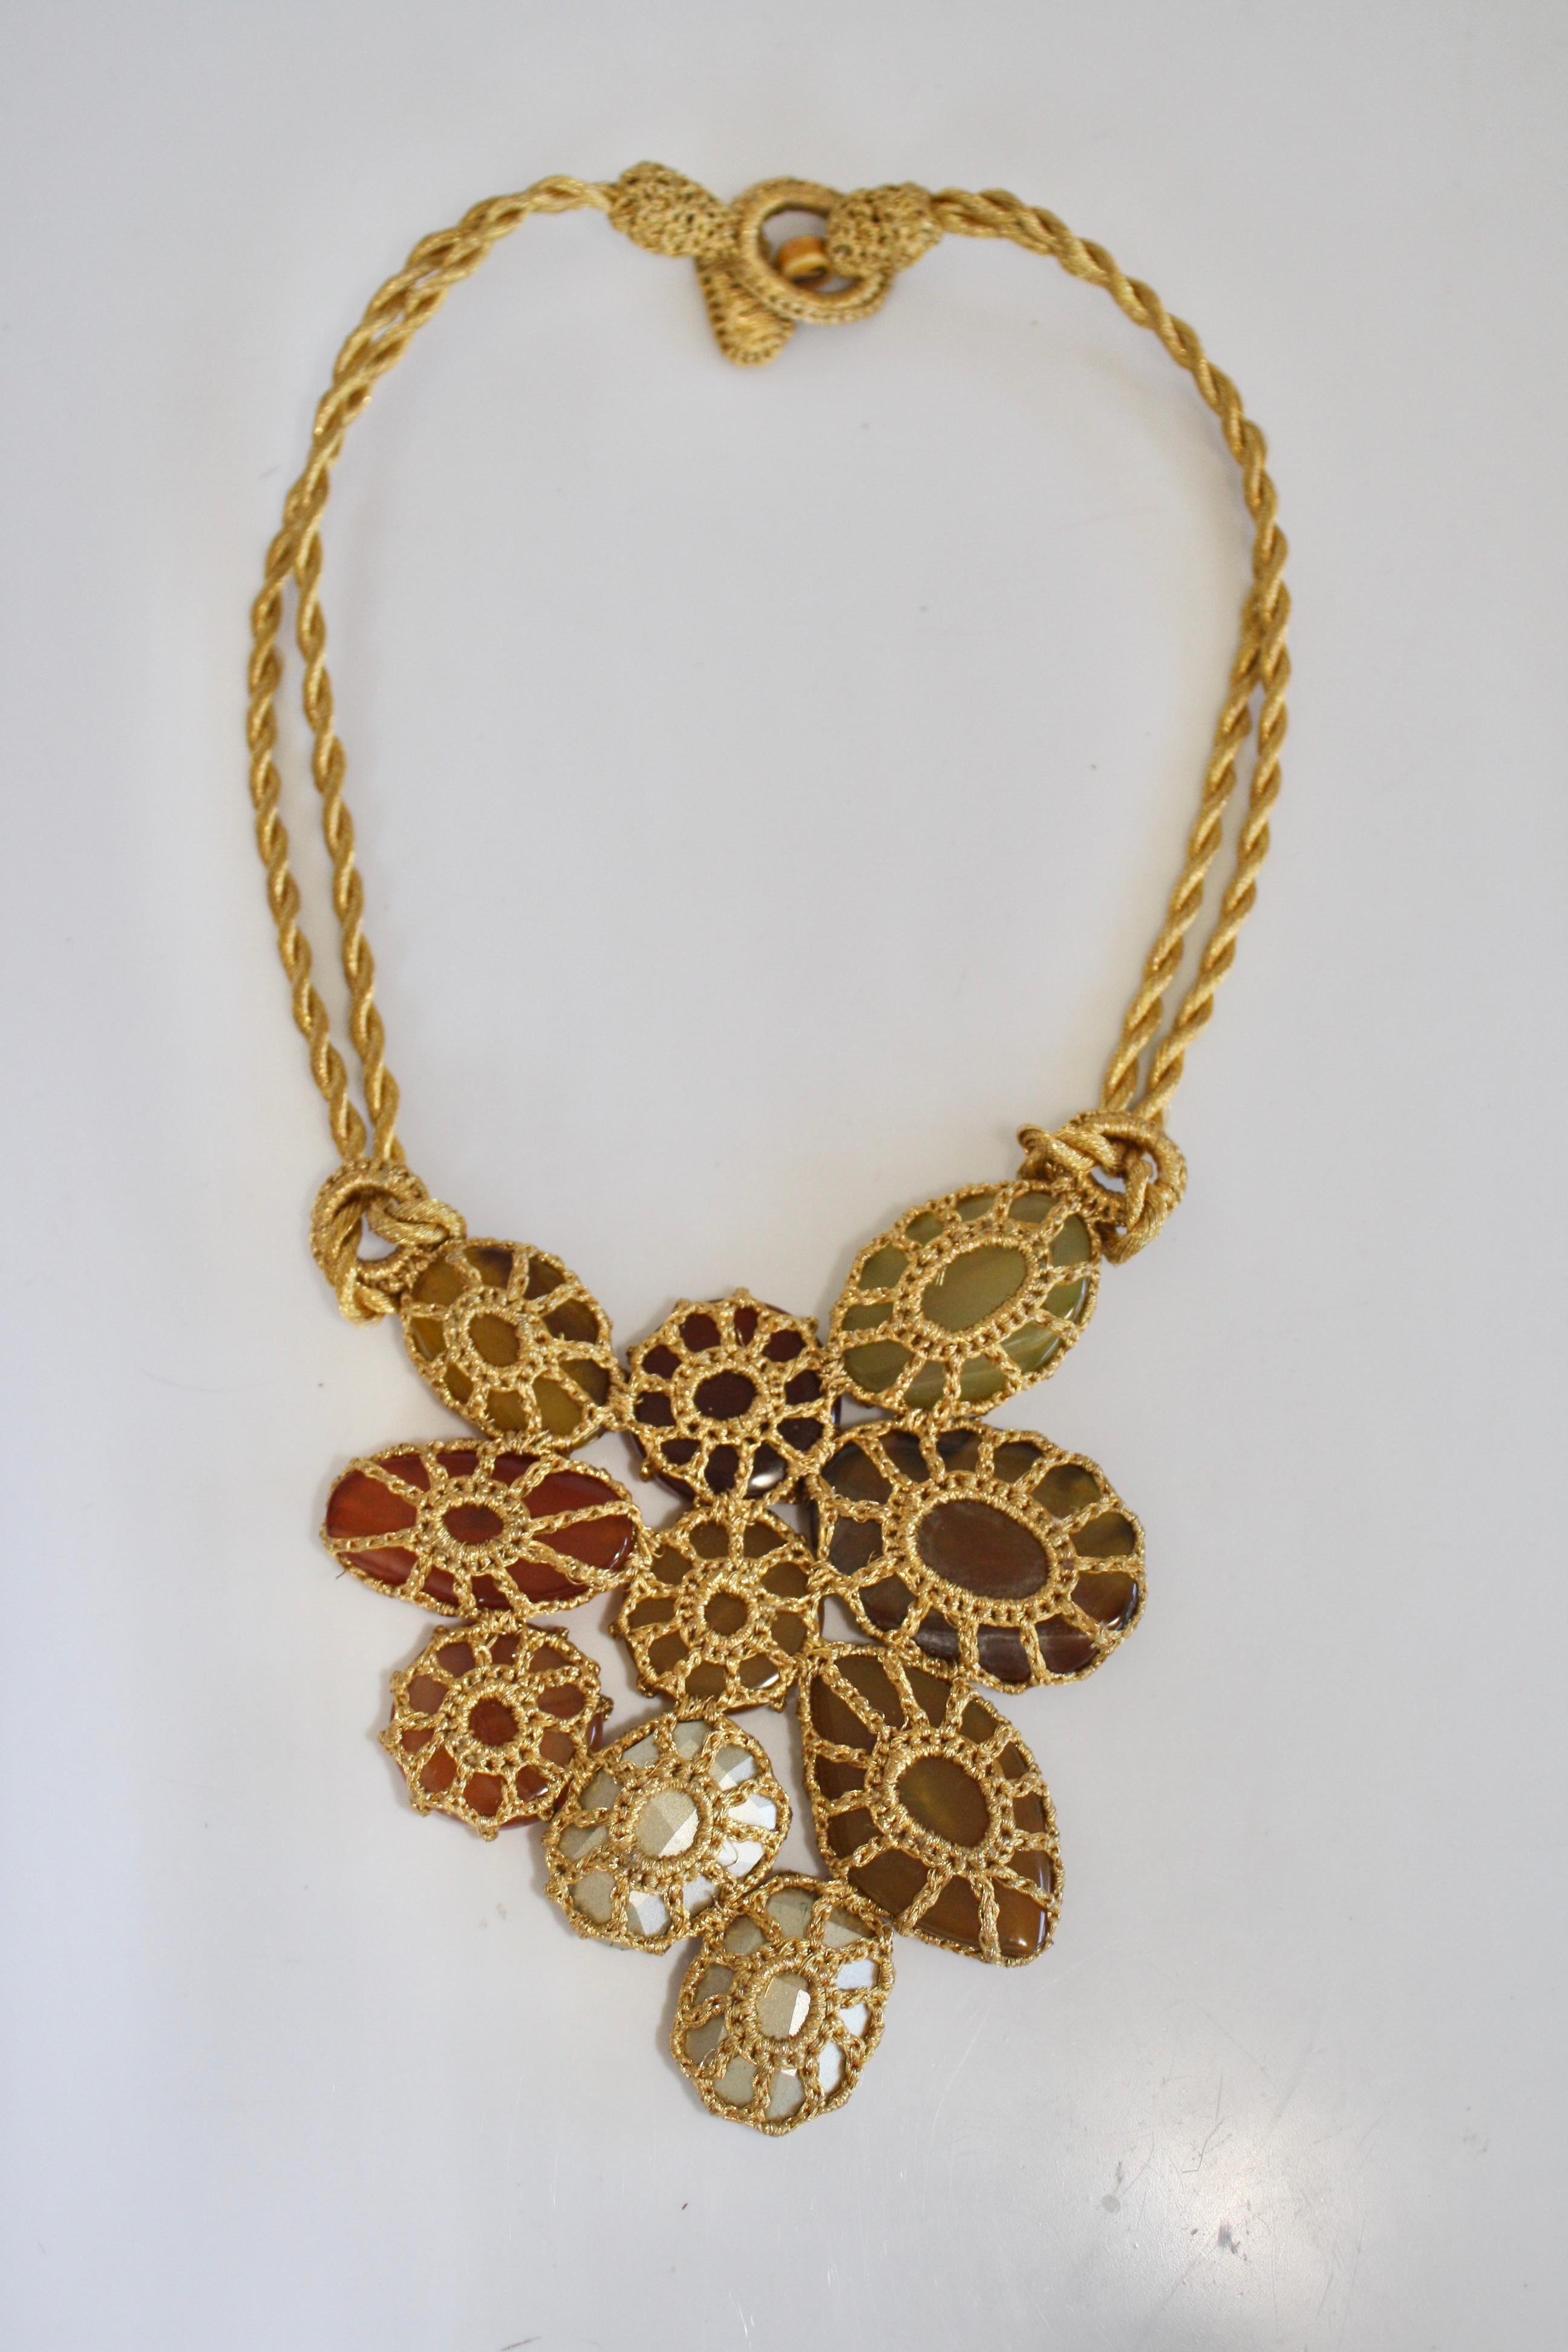 Lurex, rayon, Swarovski crystal, yellow calcite, agate, cornelian, Murano glass, and amber statement necklace. 20